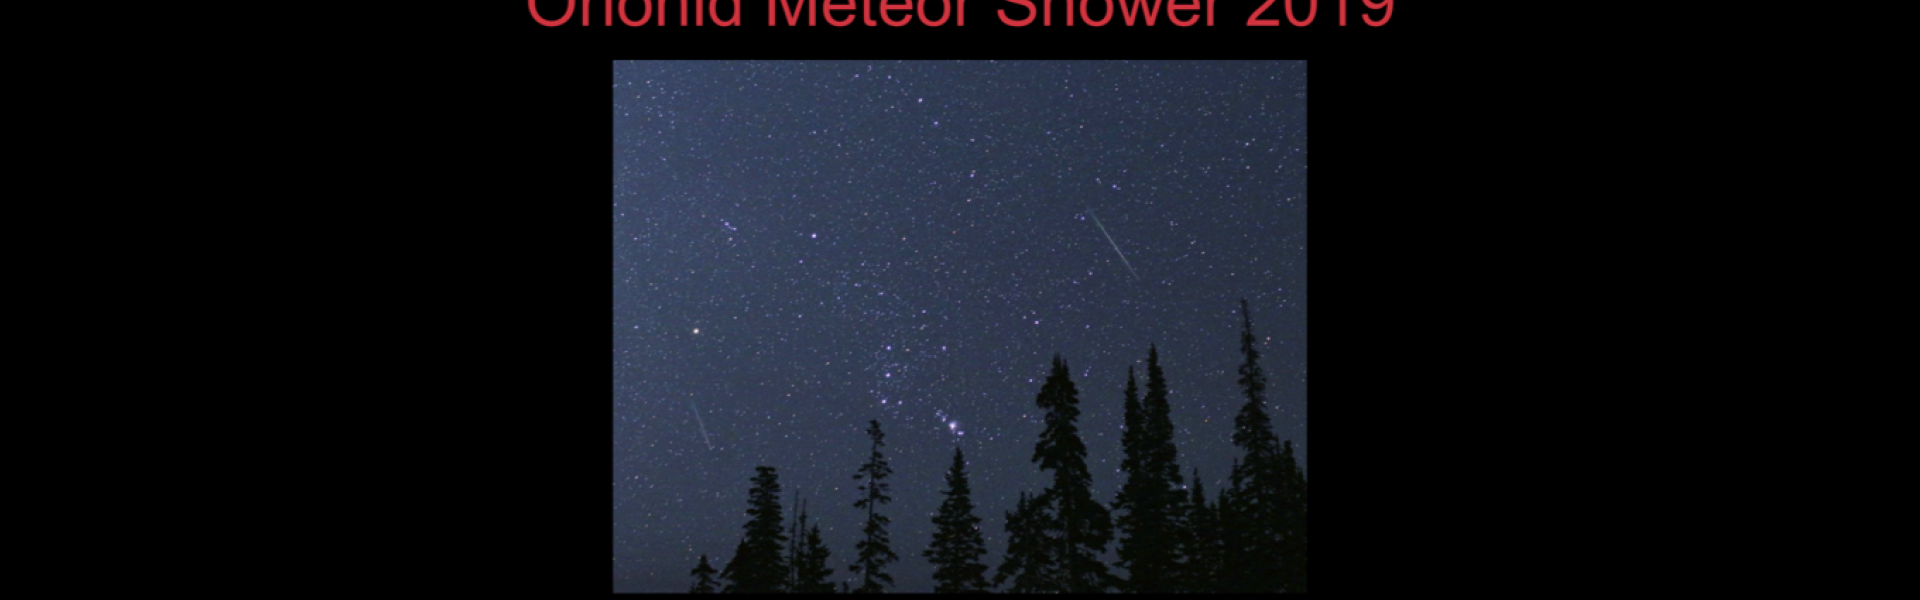 Orionid Meteor Shower 2019